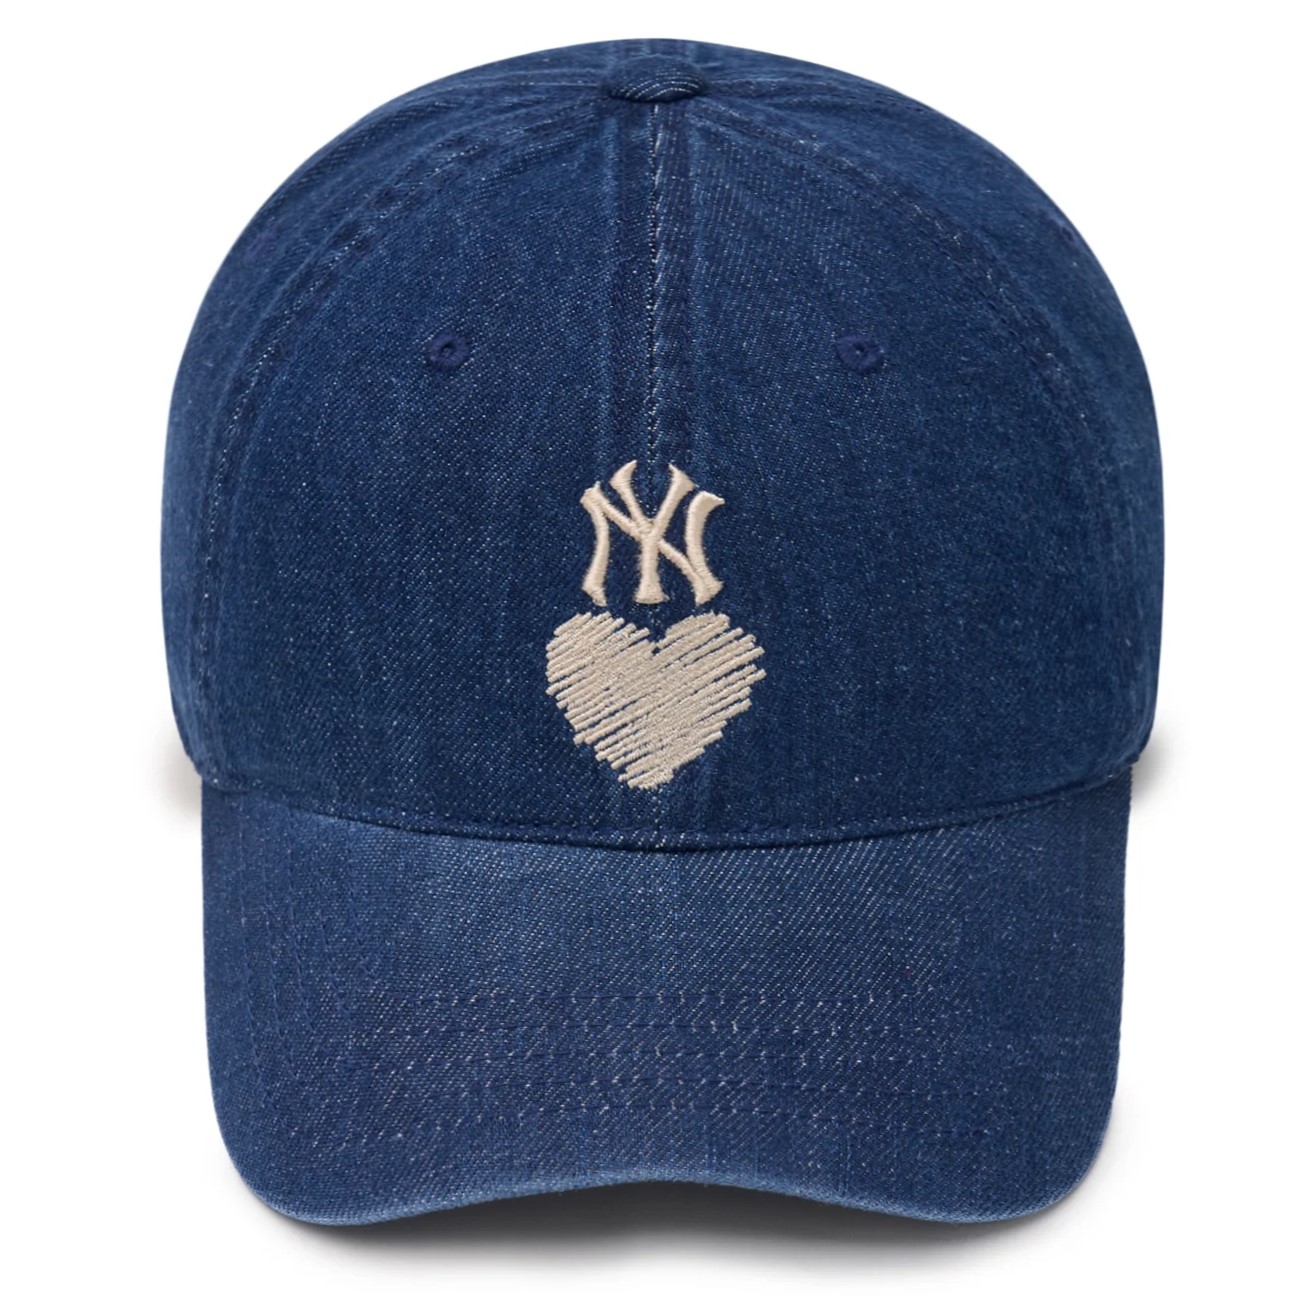 NÓN LƯỠI TRAI MLB NY INDIGO DENIM HEART UNSTRUCTURED BALL CAP NEW YORK YANKEES 3ACPH024N-50IN 2